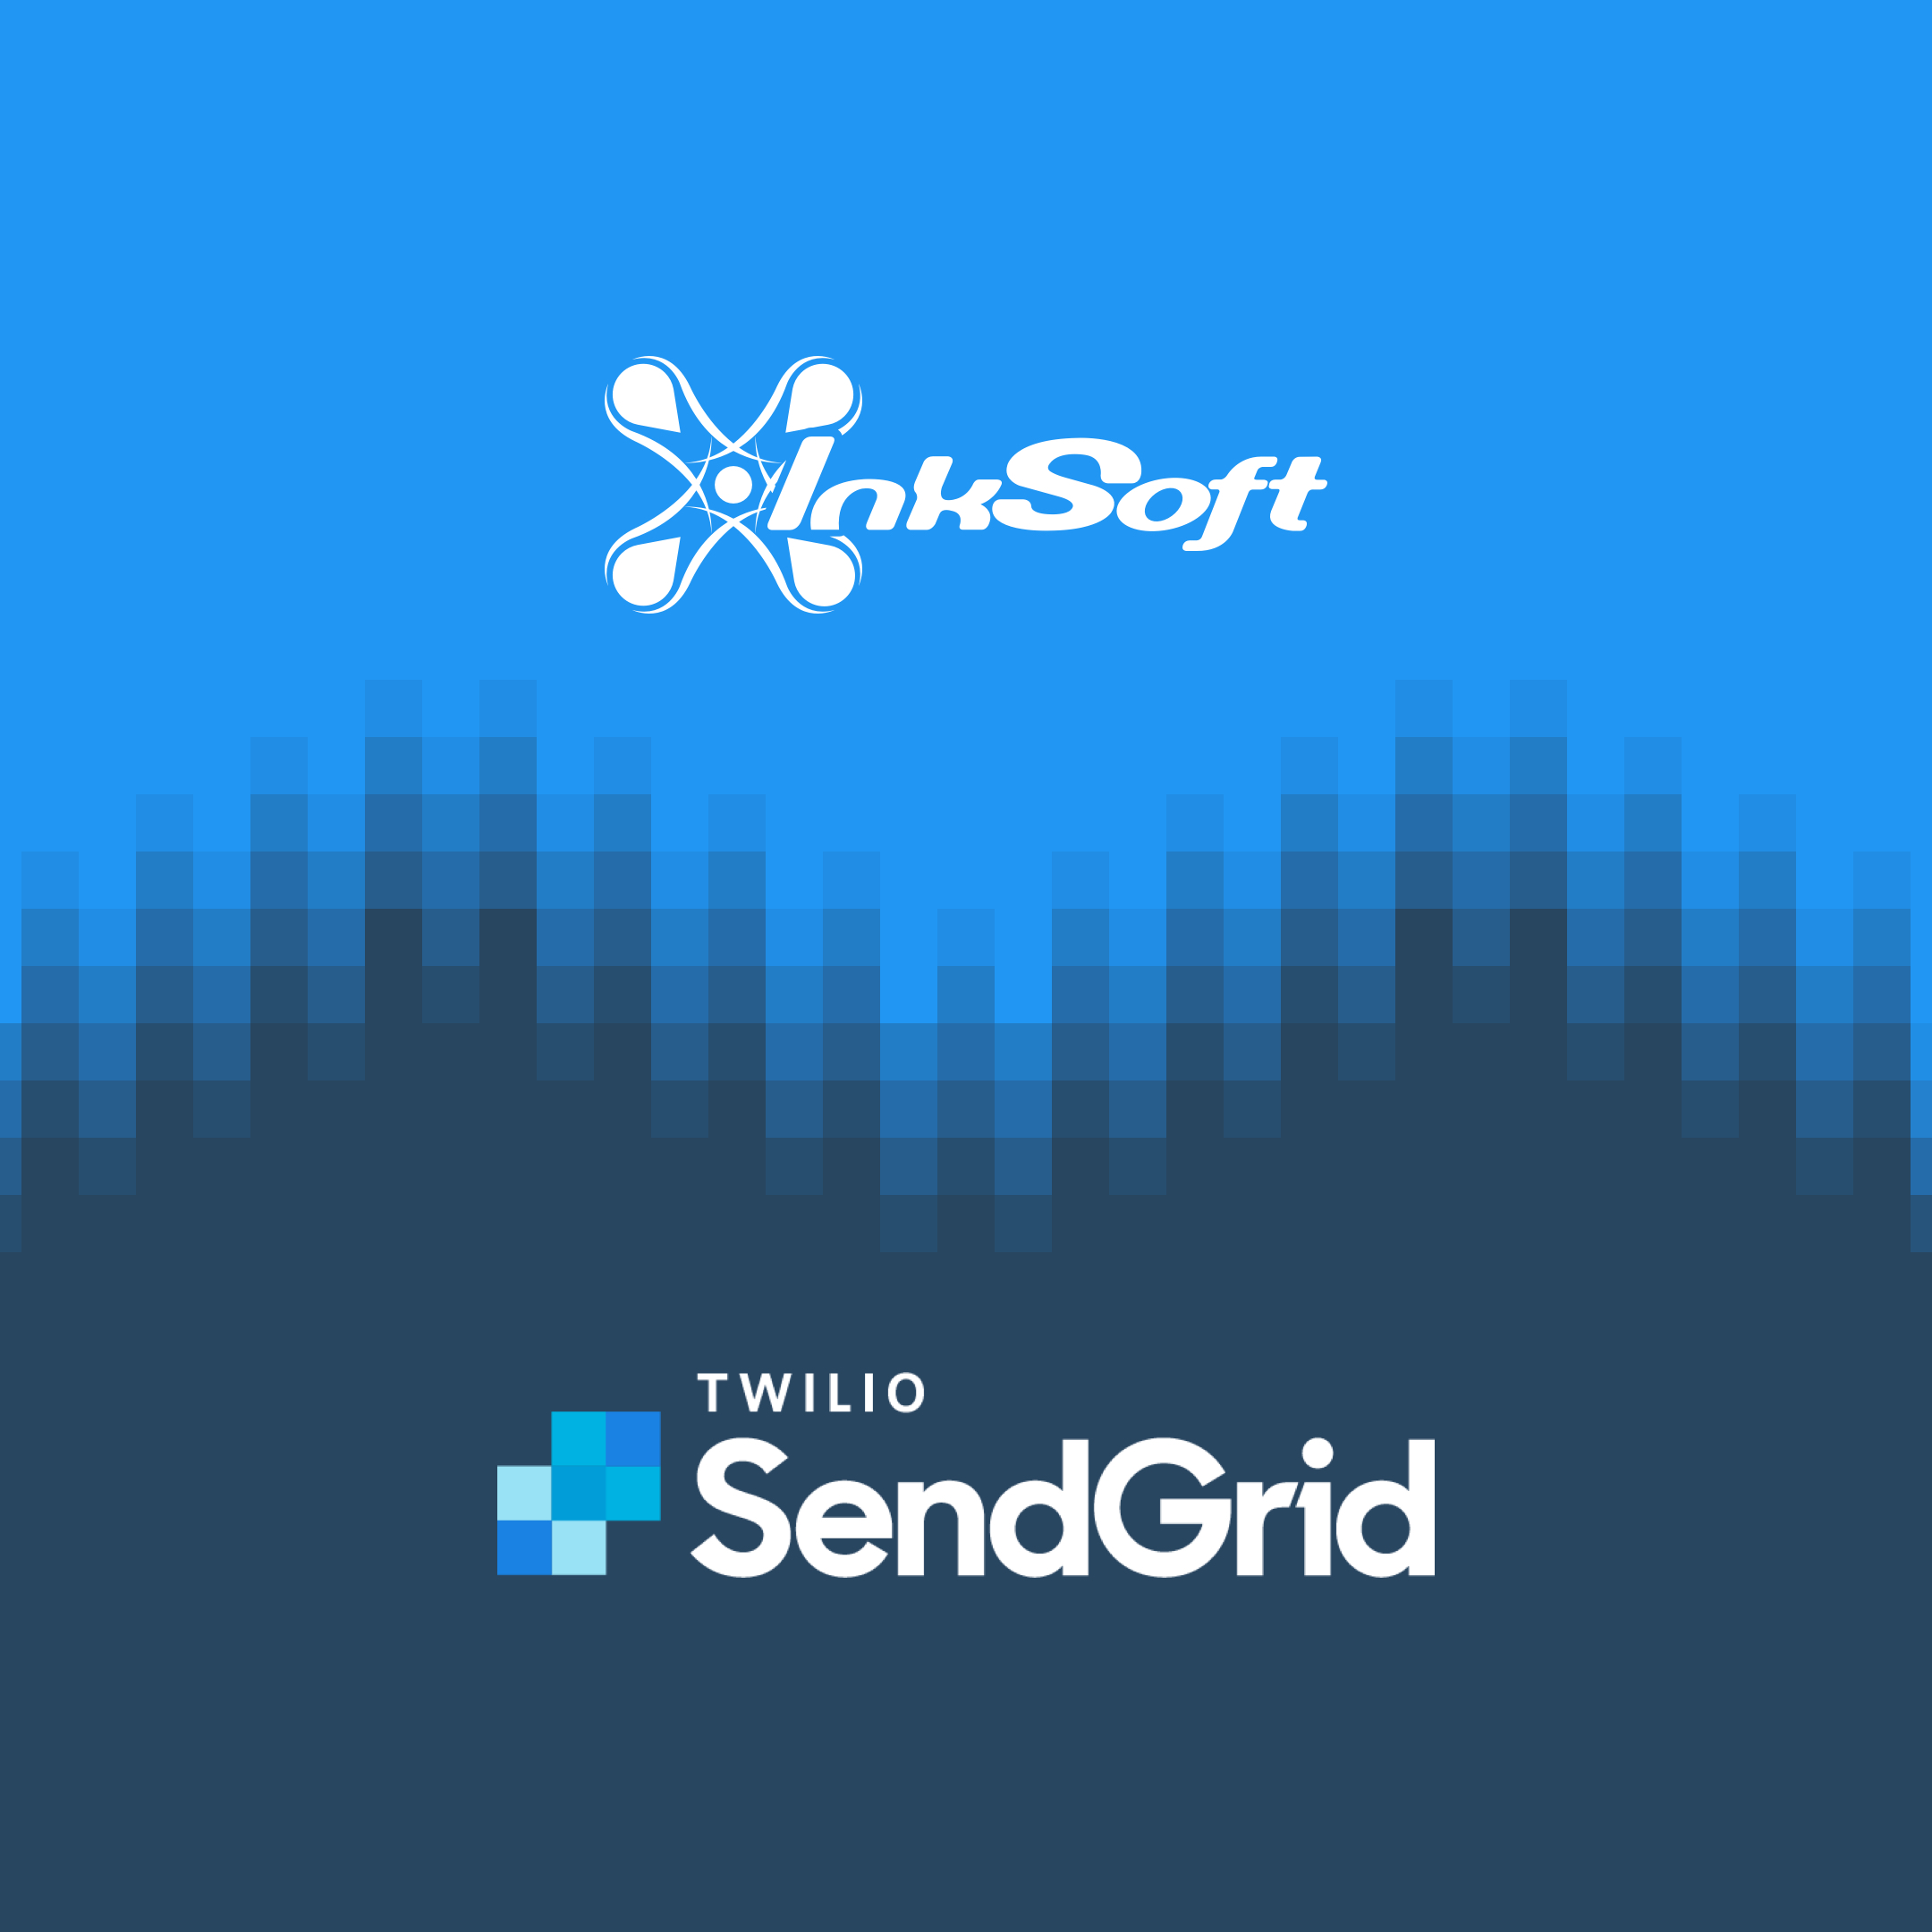 inksoft adds sendgrid